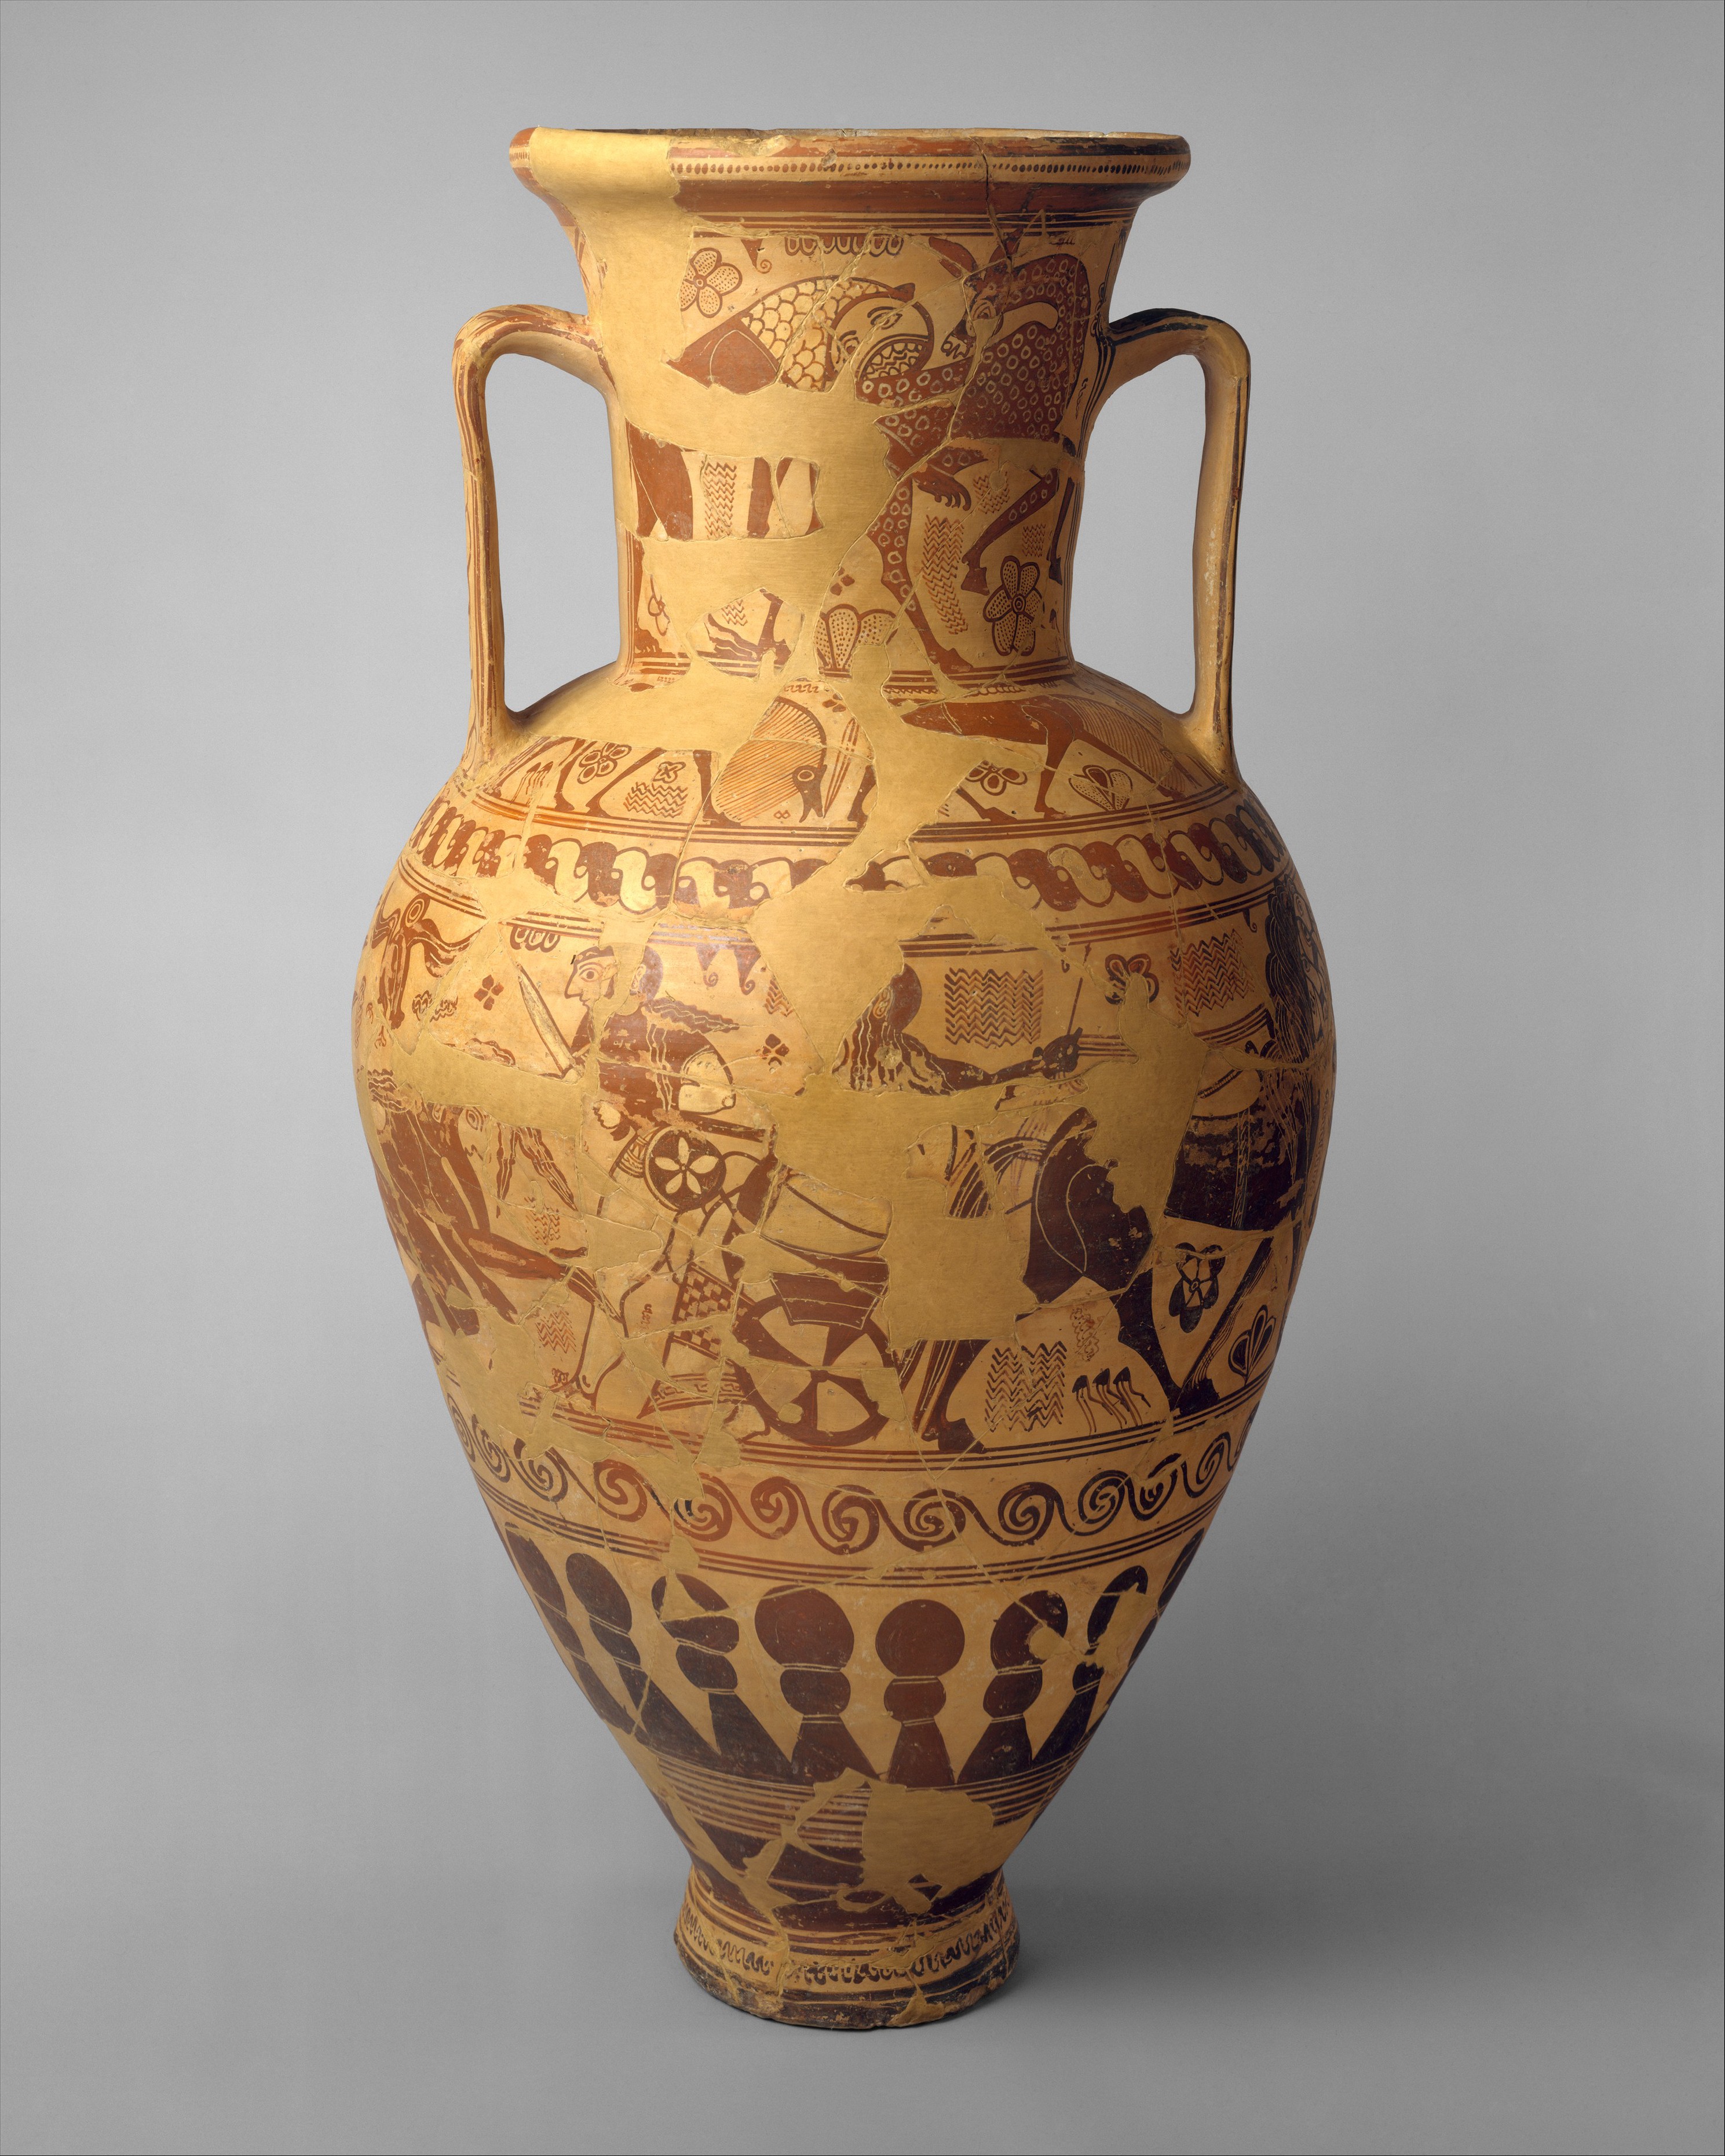 Attributed to the New York Nessos Painter | Terracotta neck-amphora  (storage jar) | Greek, Attic | Proto-Attic | The Metropolitan Museum of Art